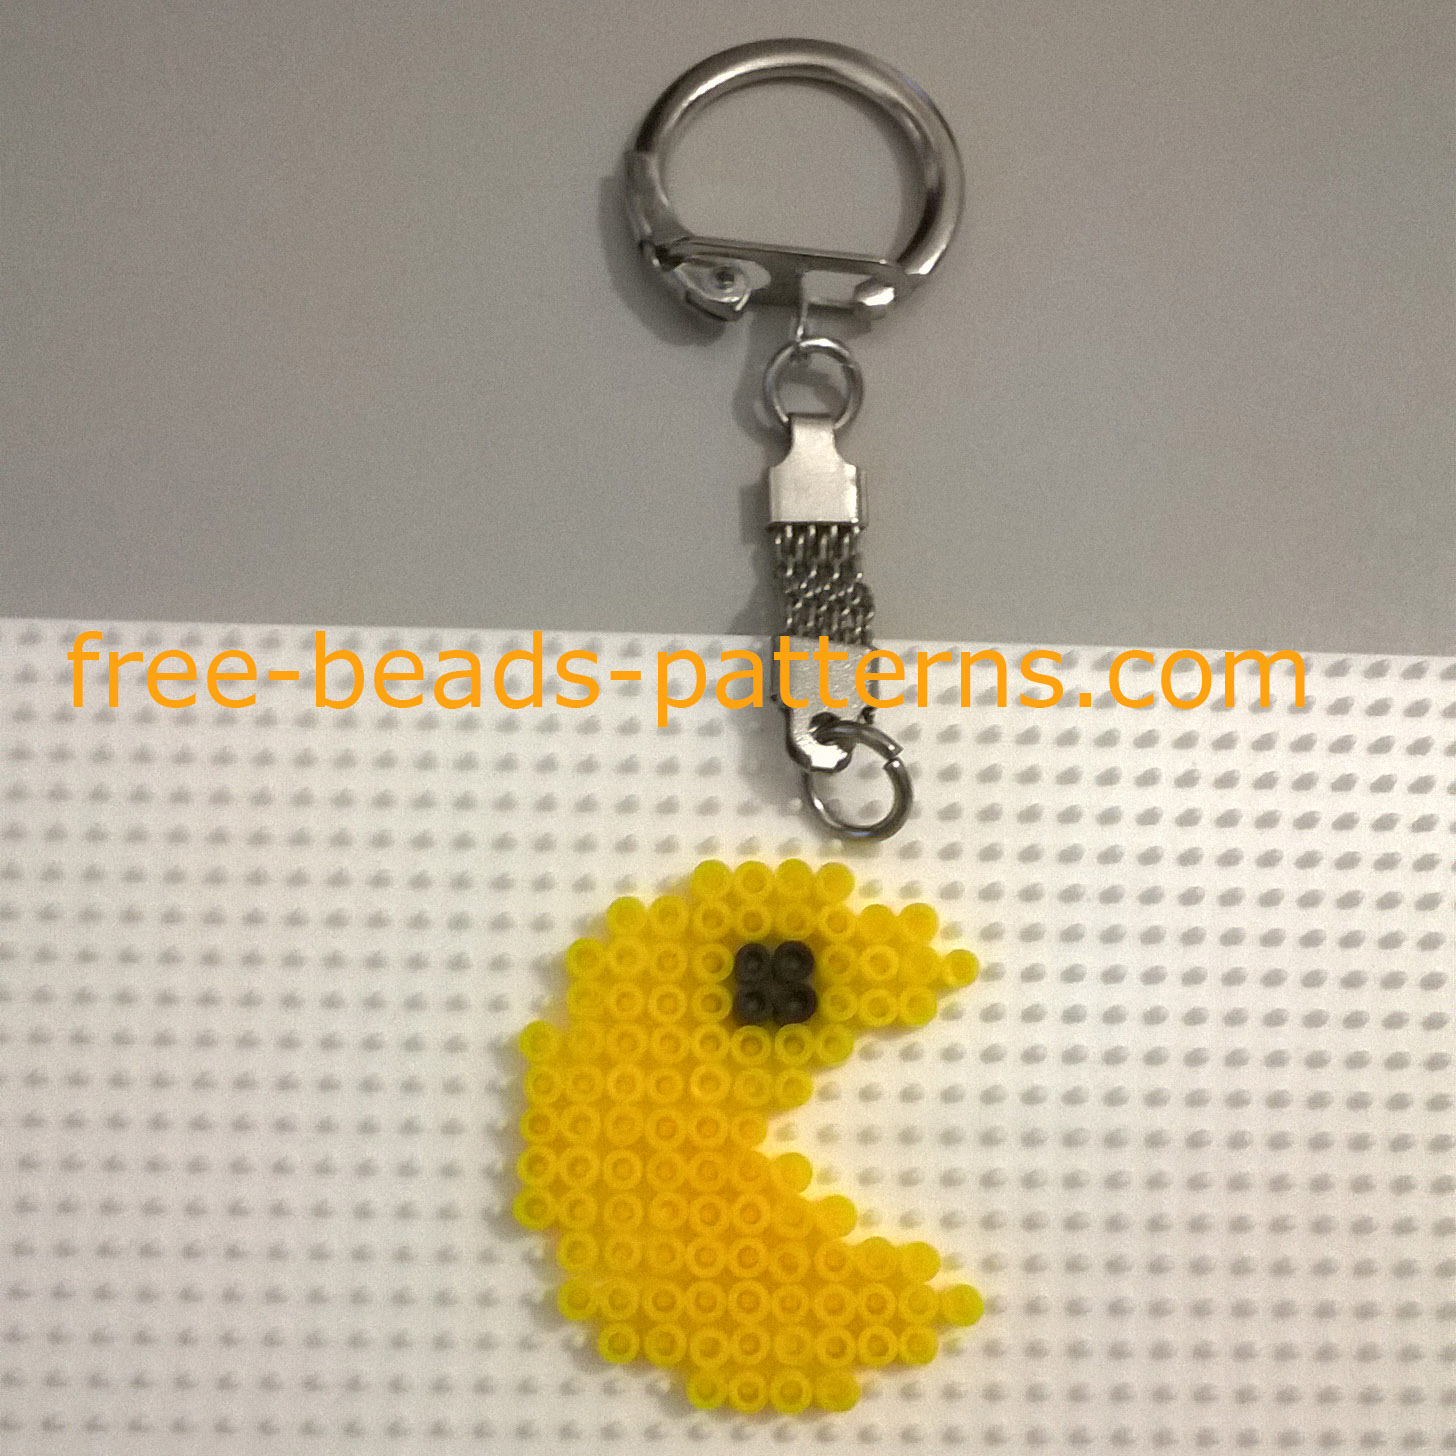 Pacman keychain work photos Hama Beads author site user Bill (5)